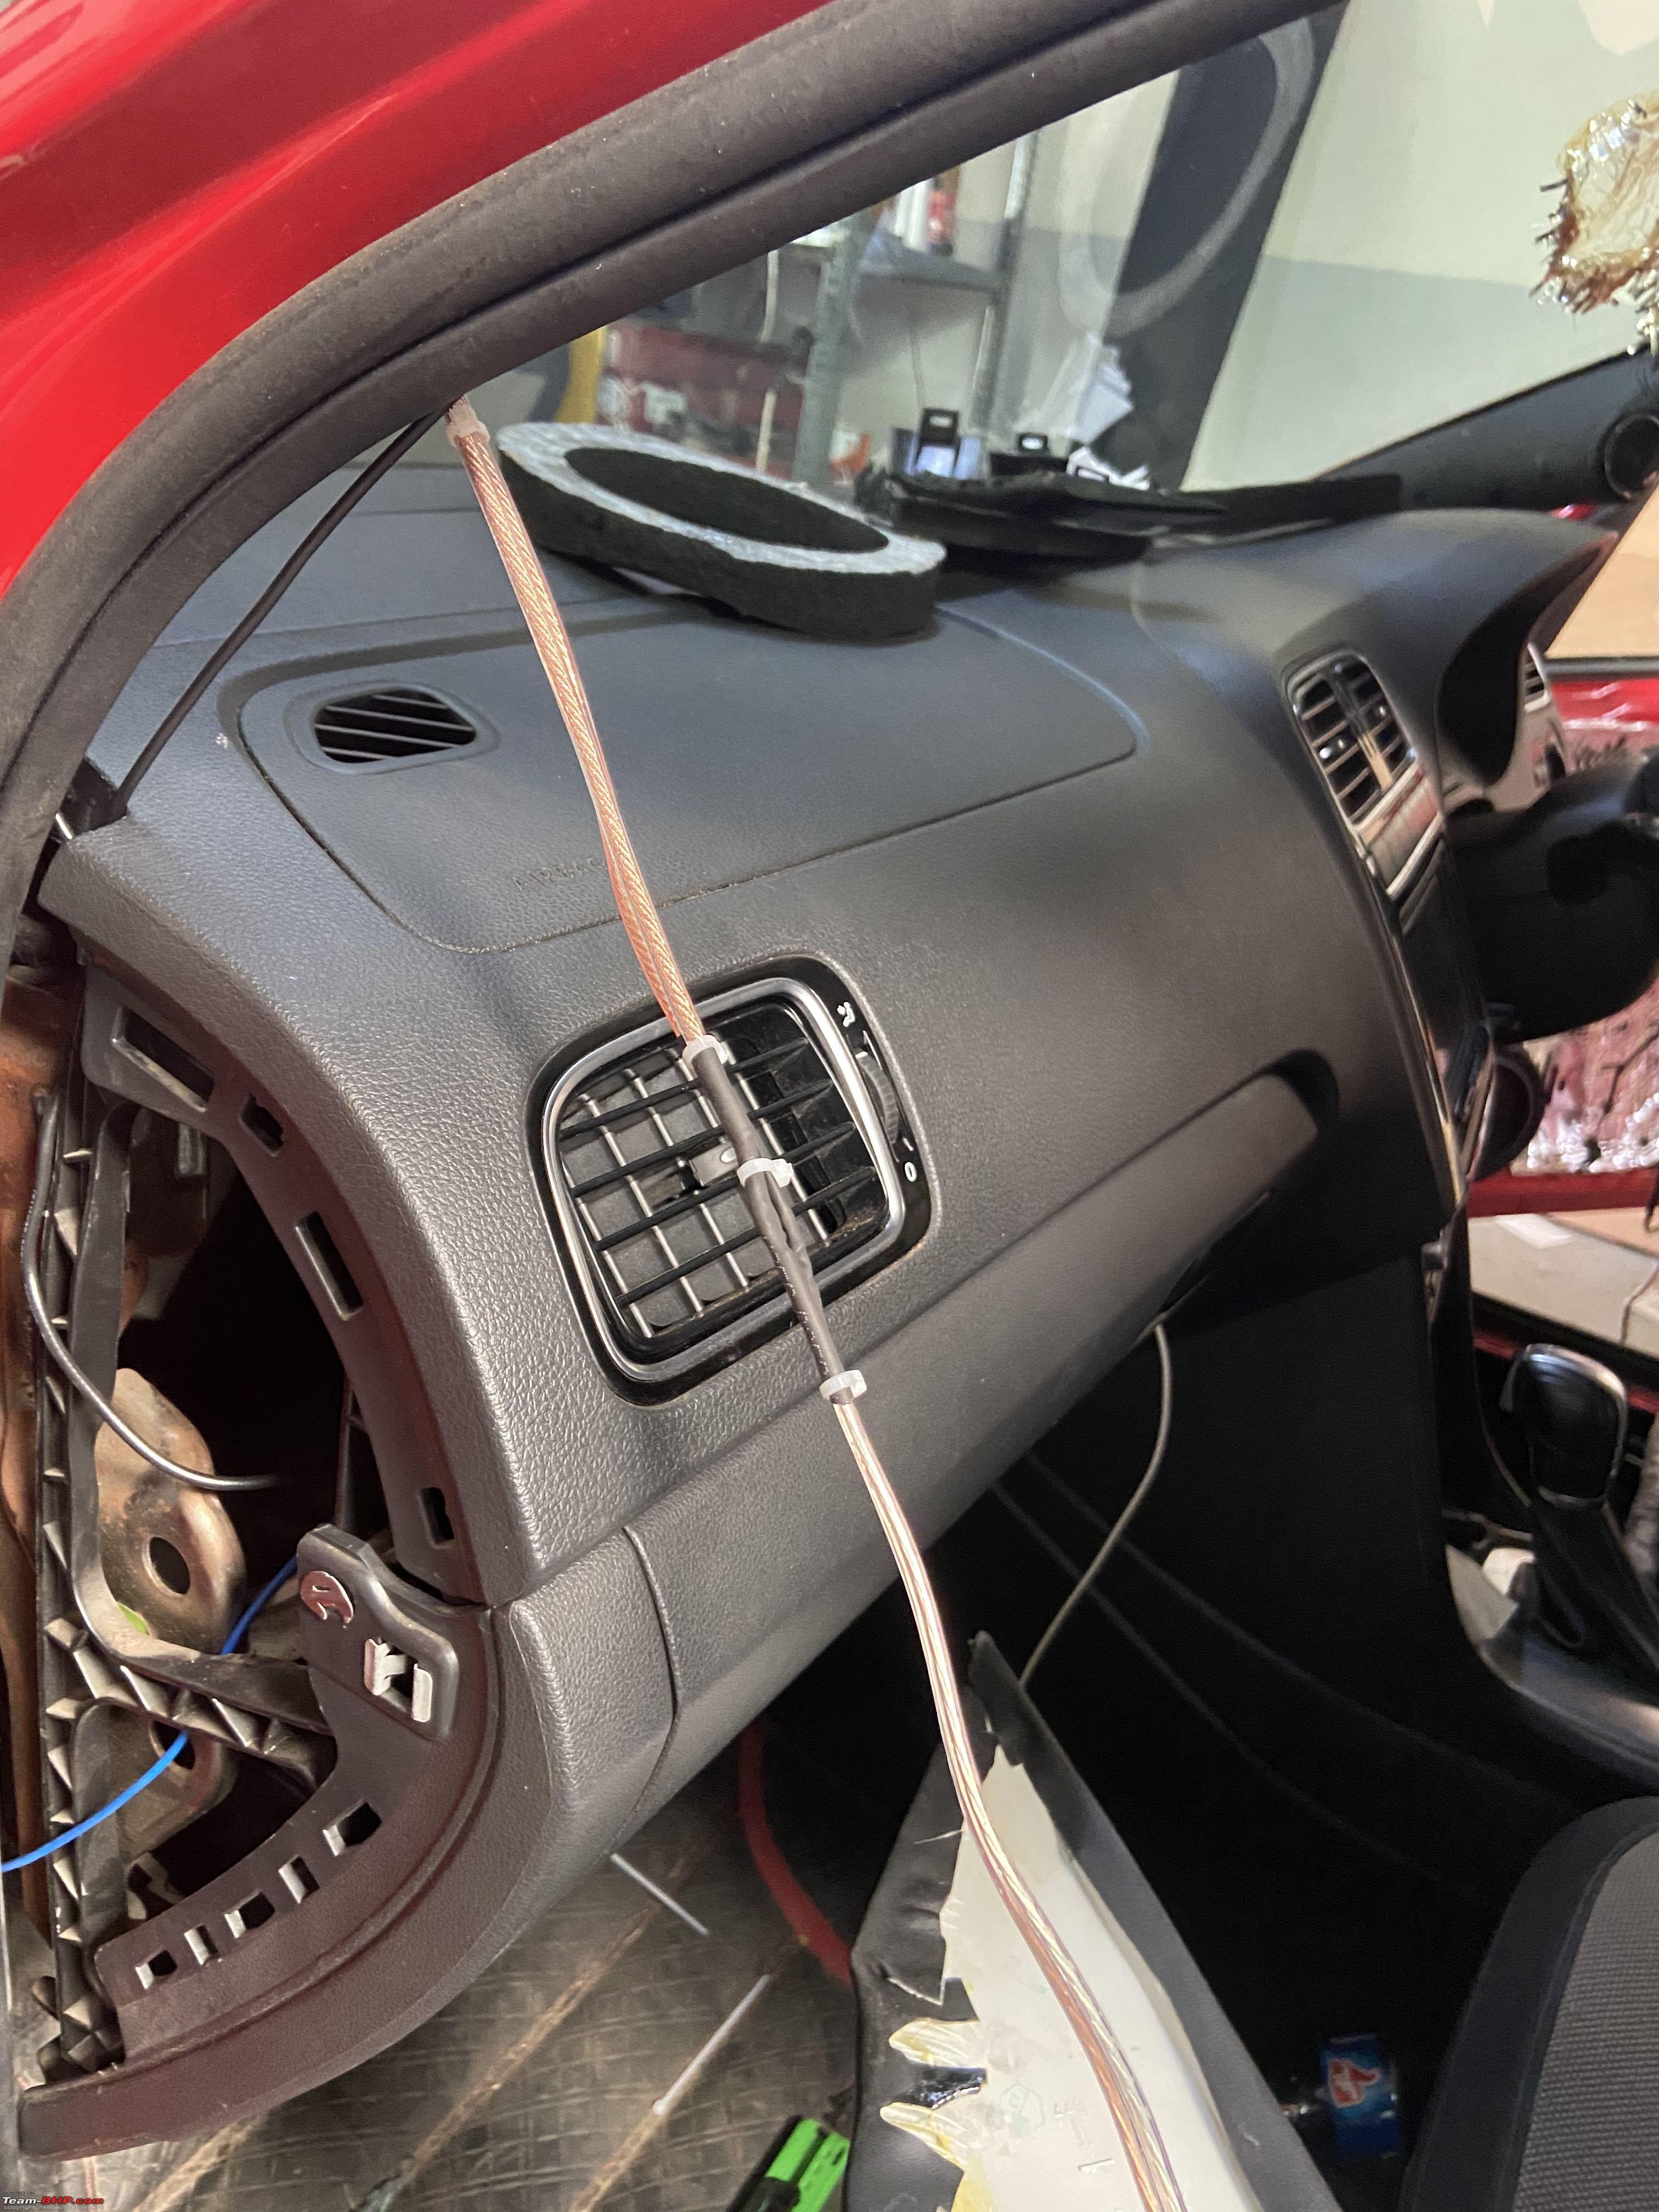 VW Polo GT SQ build, mellifluously beautiful - Blam Audio - Team-BHP